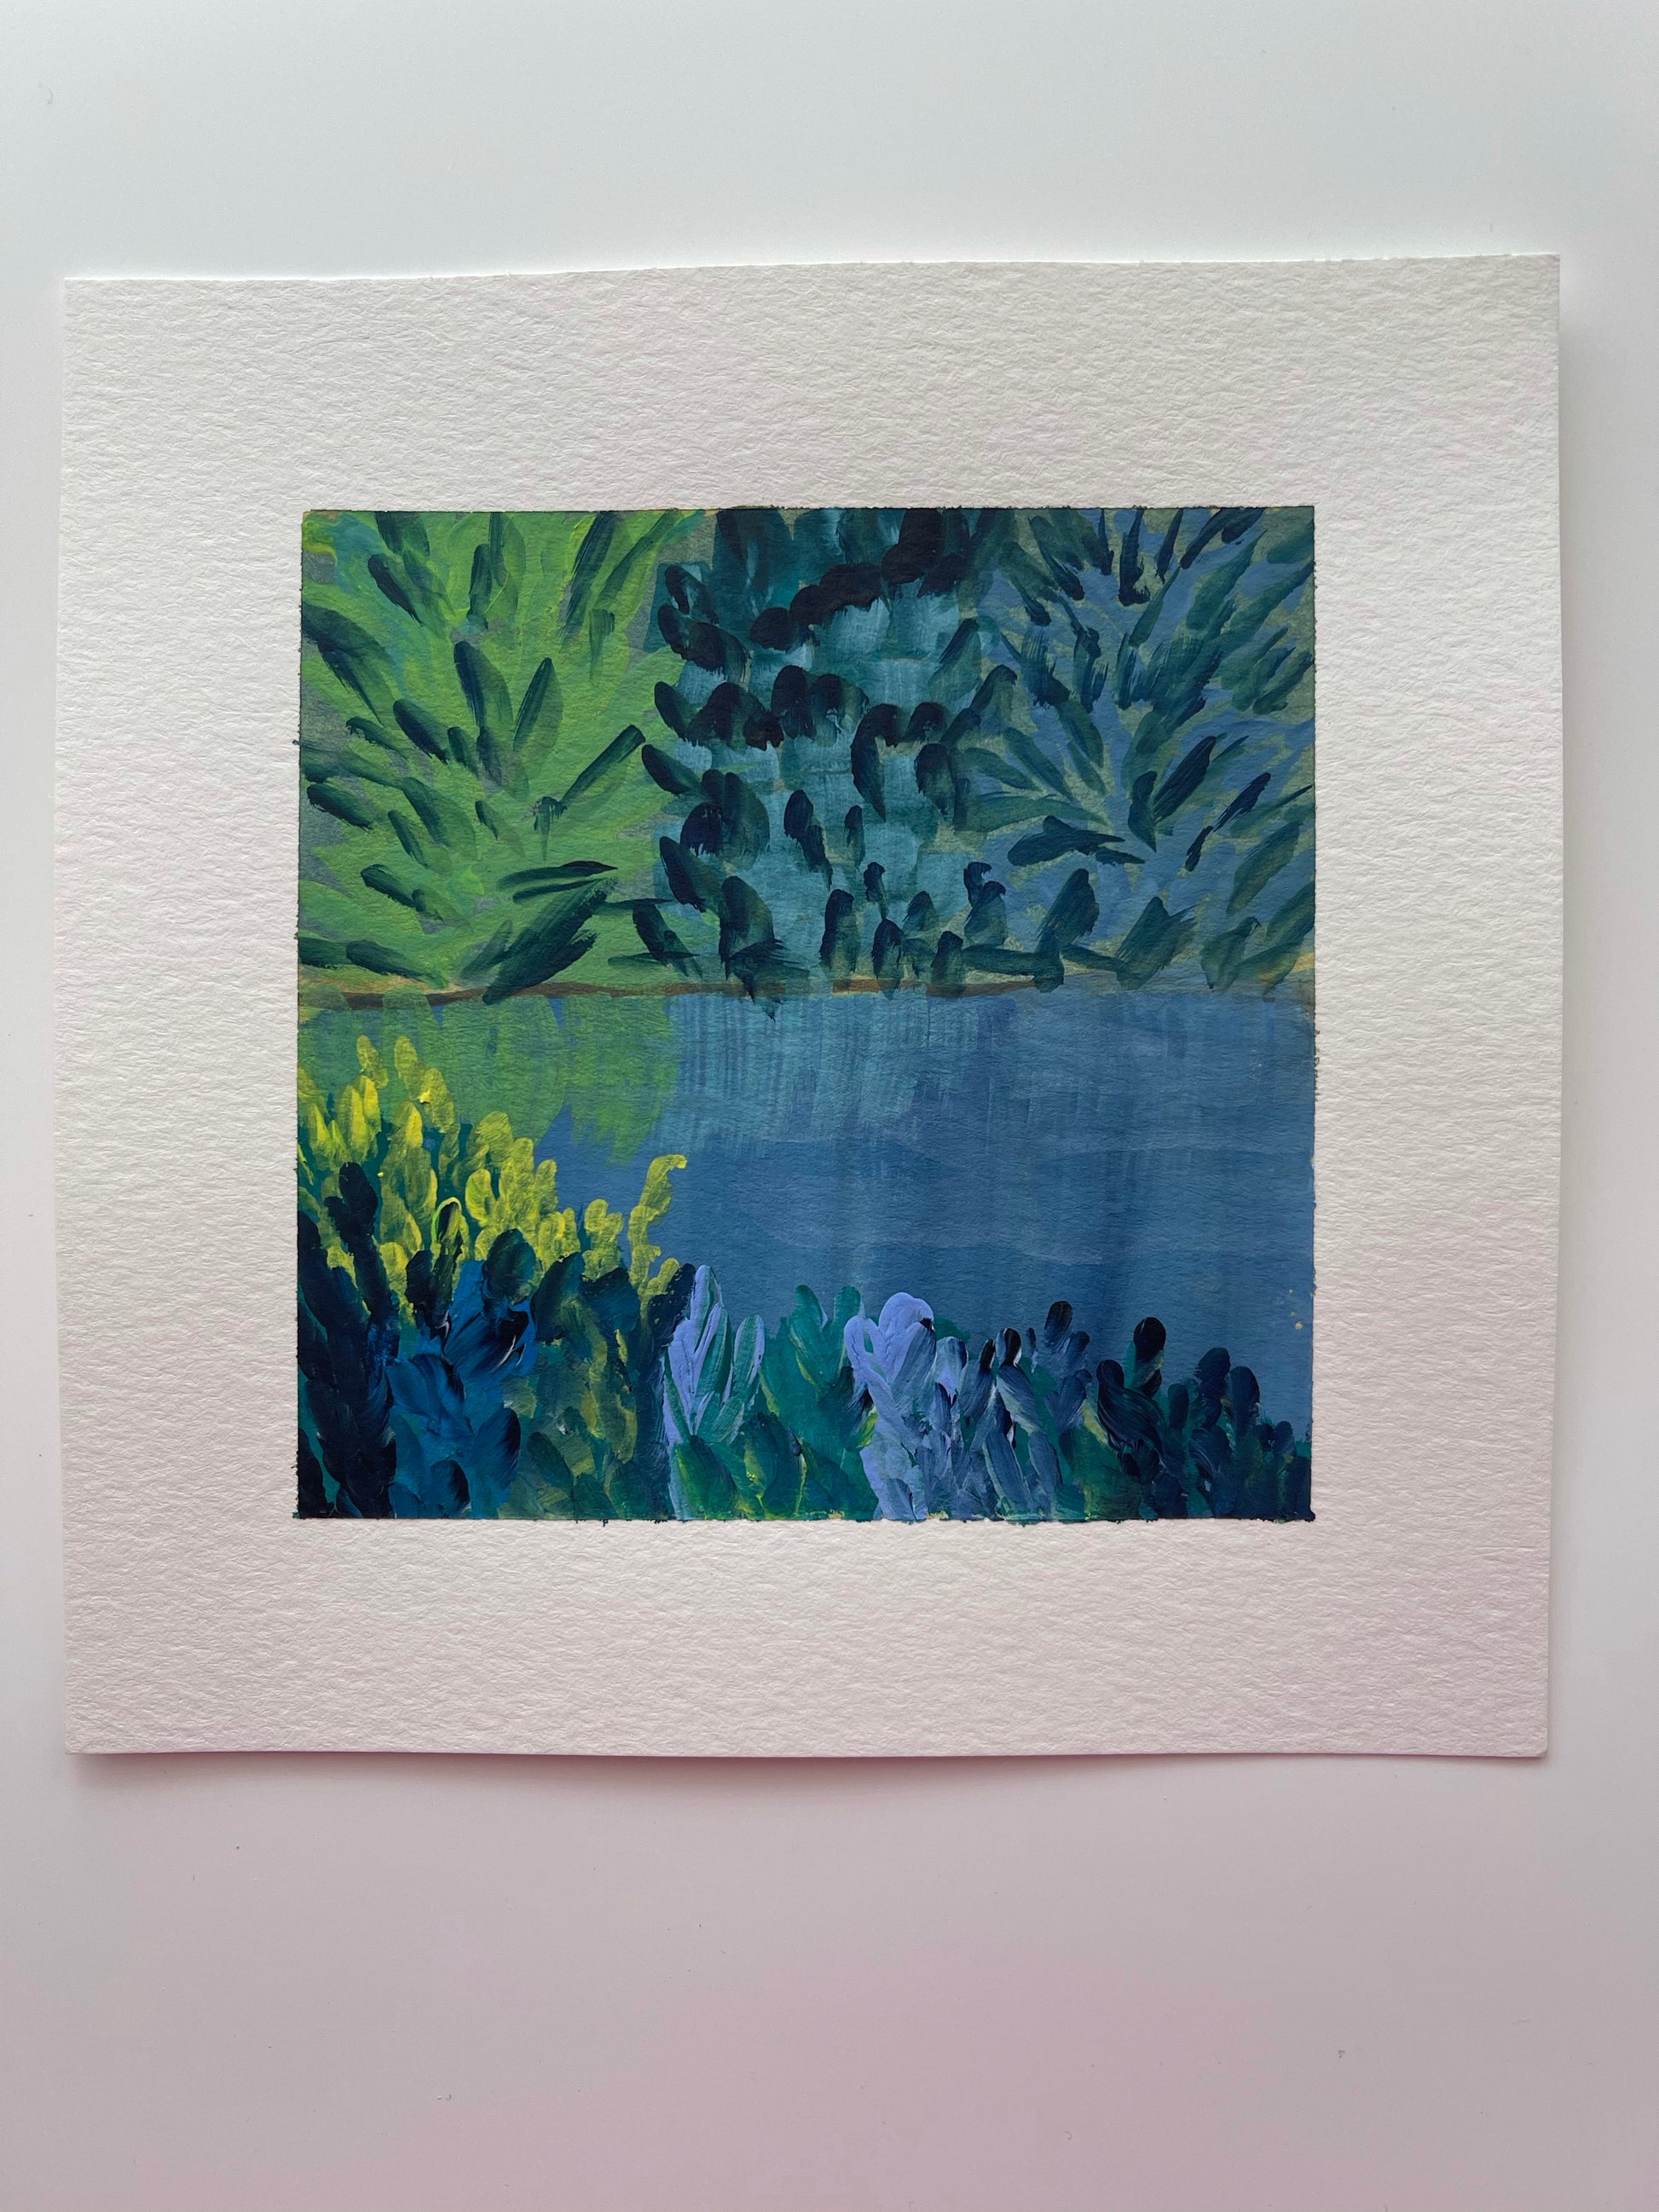 6x6-sally-j-goodrich-layers-of-pattern-landscape-painting